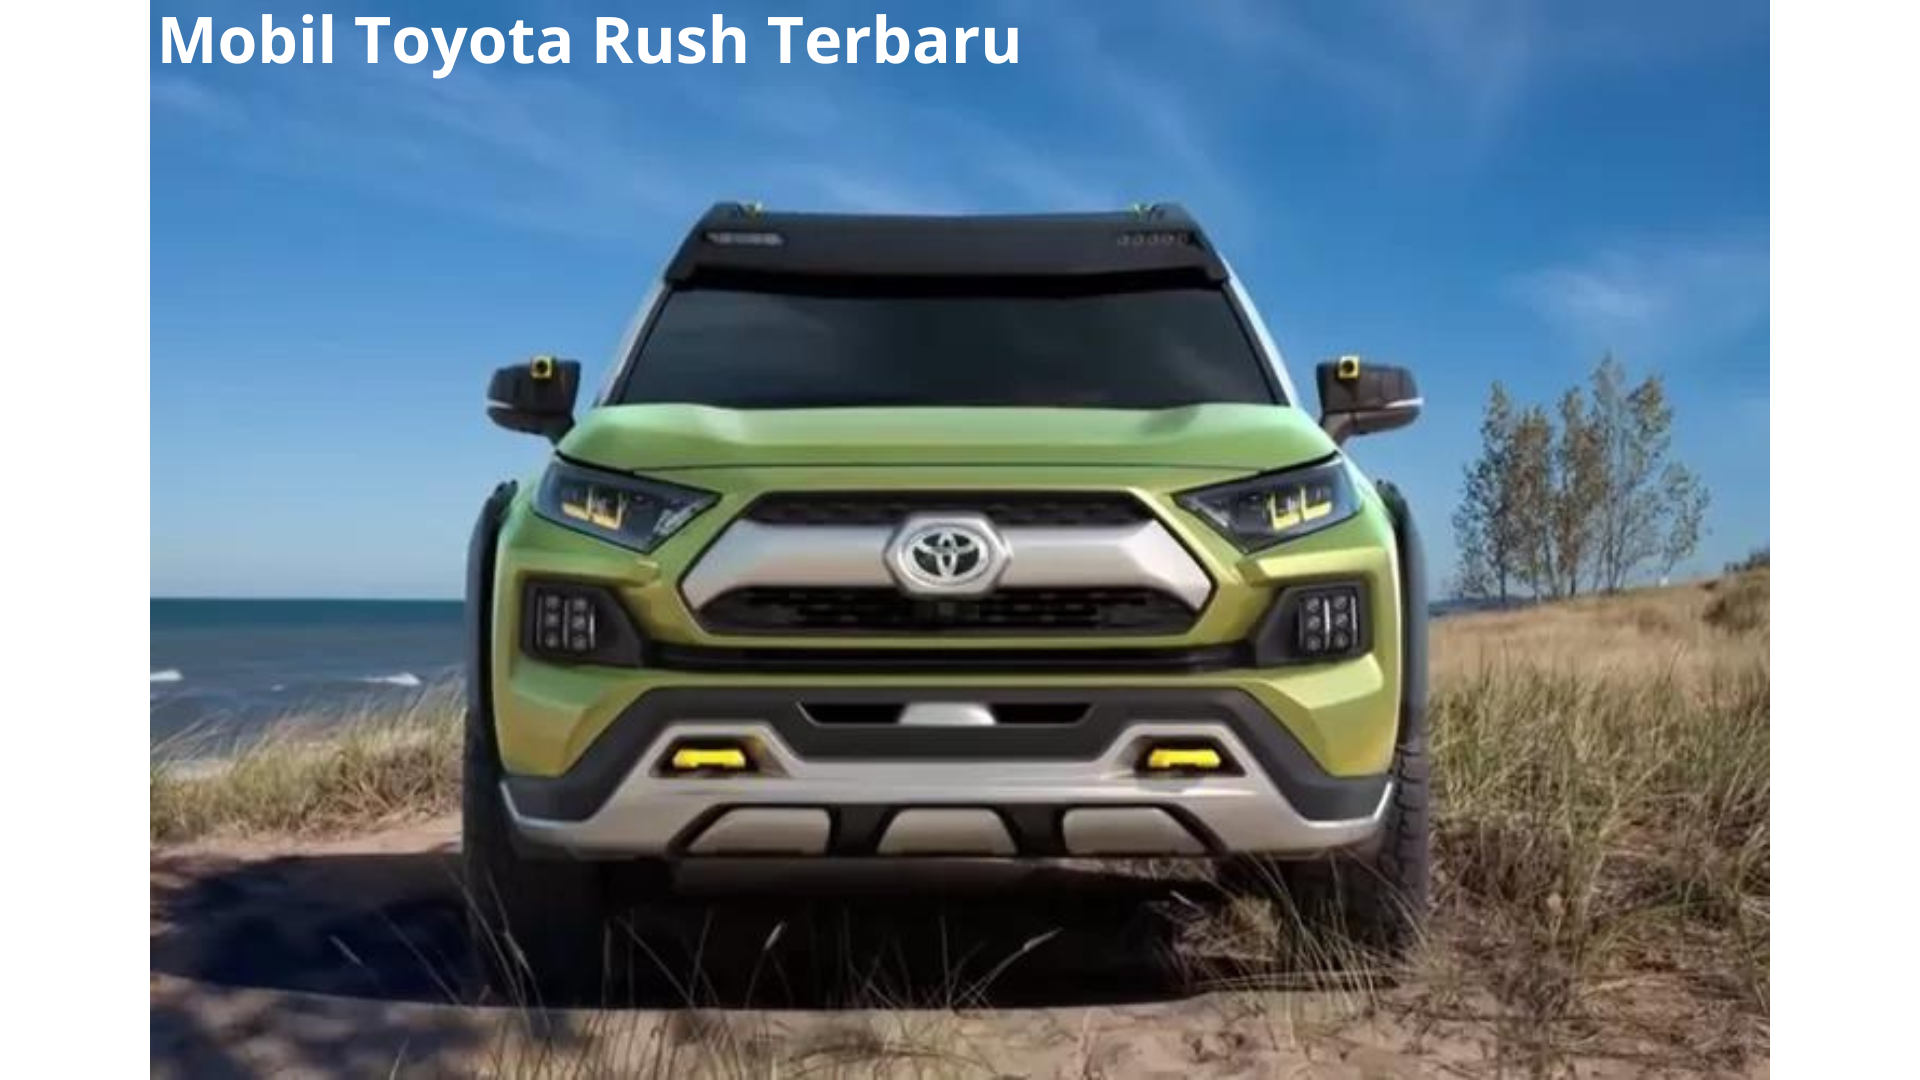 Ini Ternyata Kelebihan Mobil Toyota Rush Terbaru yang Bikin Pecinta SUV Kagum